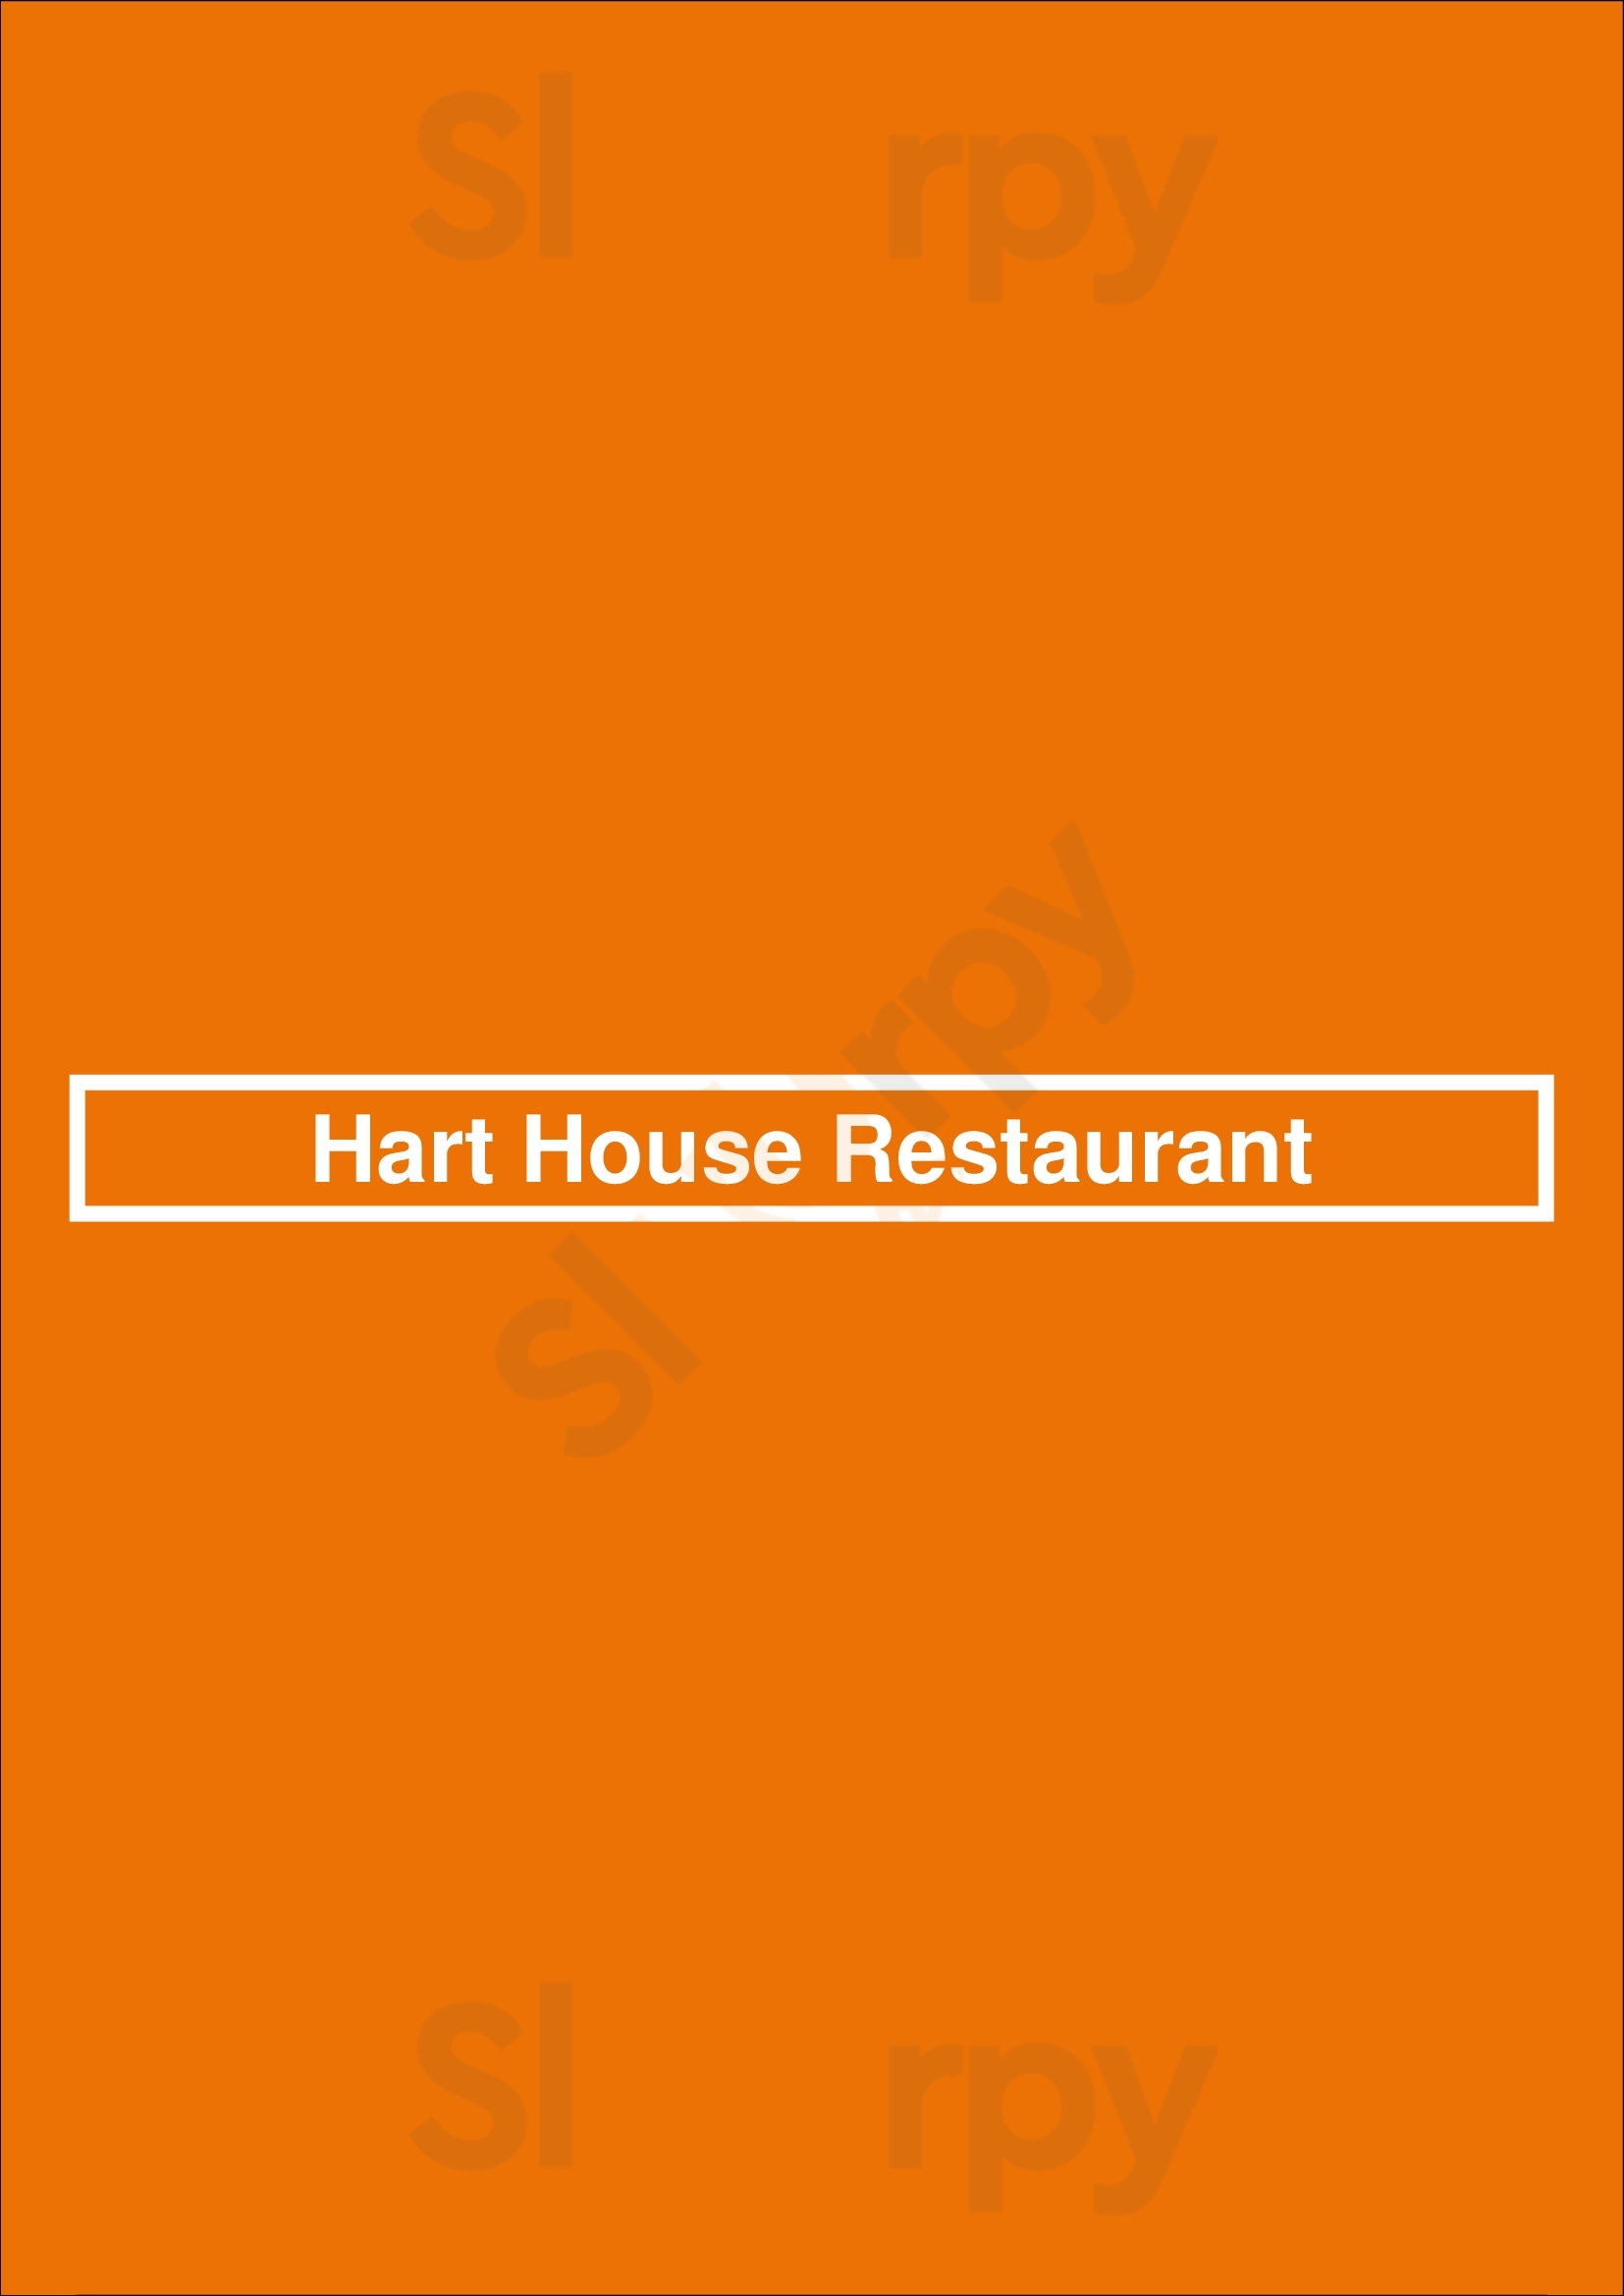 Hart House Restaurant Burnaby Menu - 1